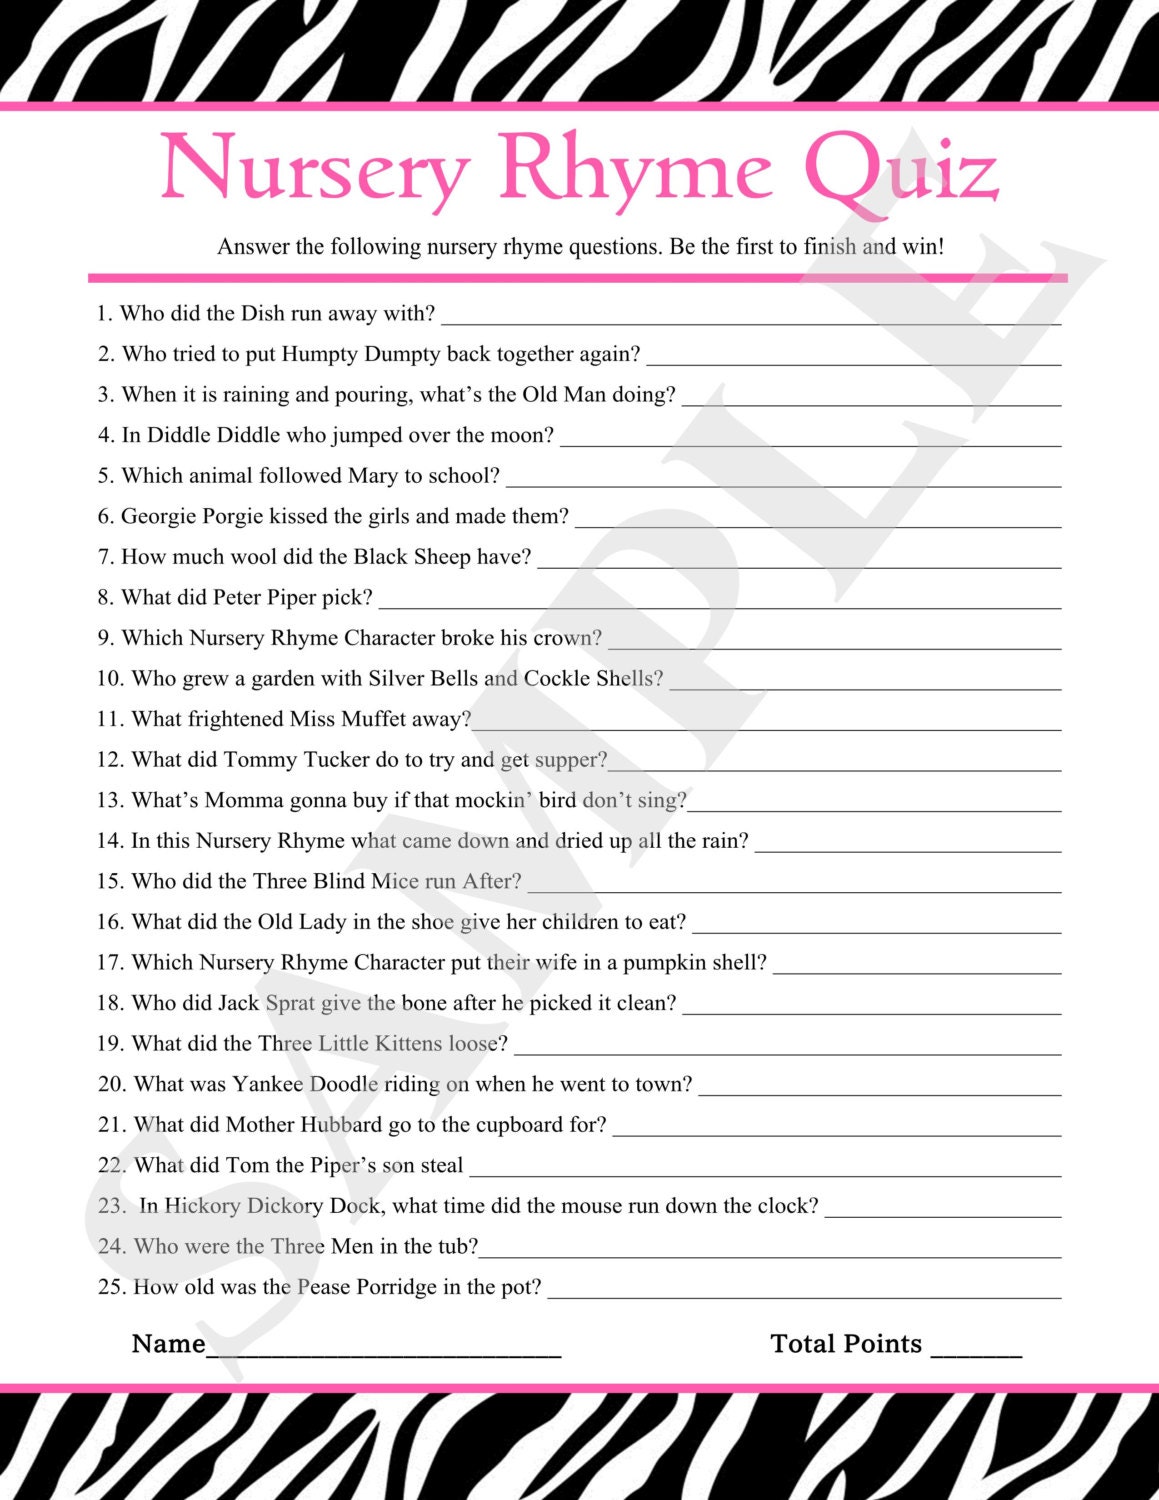 Instant Download Printable Nursery Rhyme Quiz by jessica91582